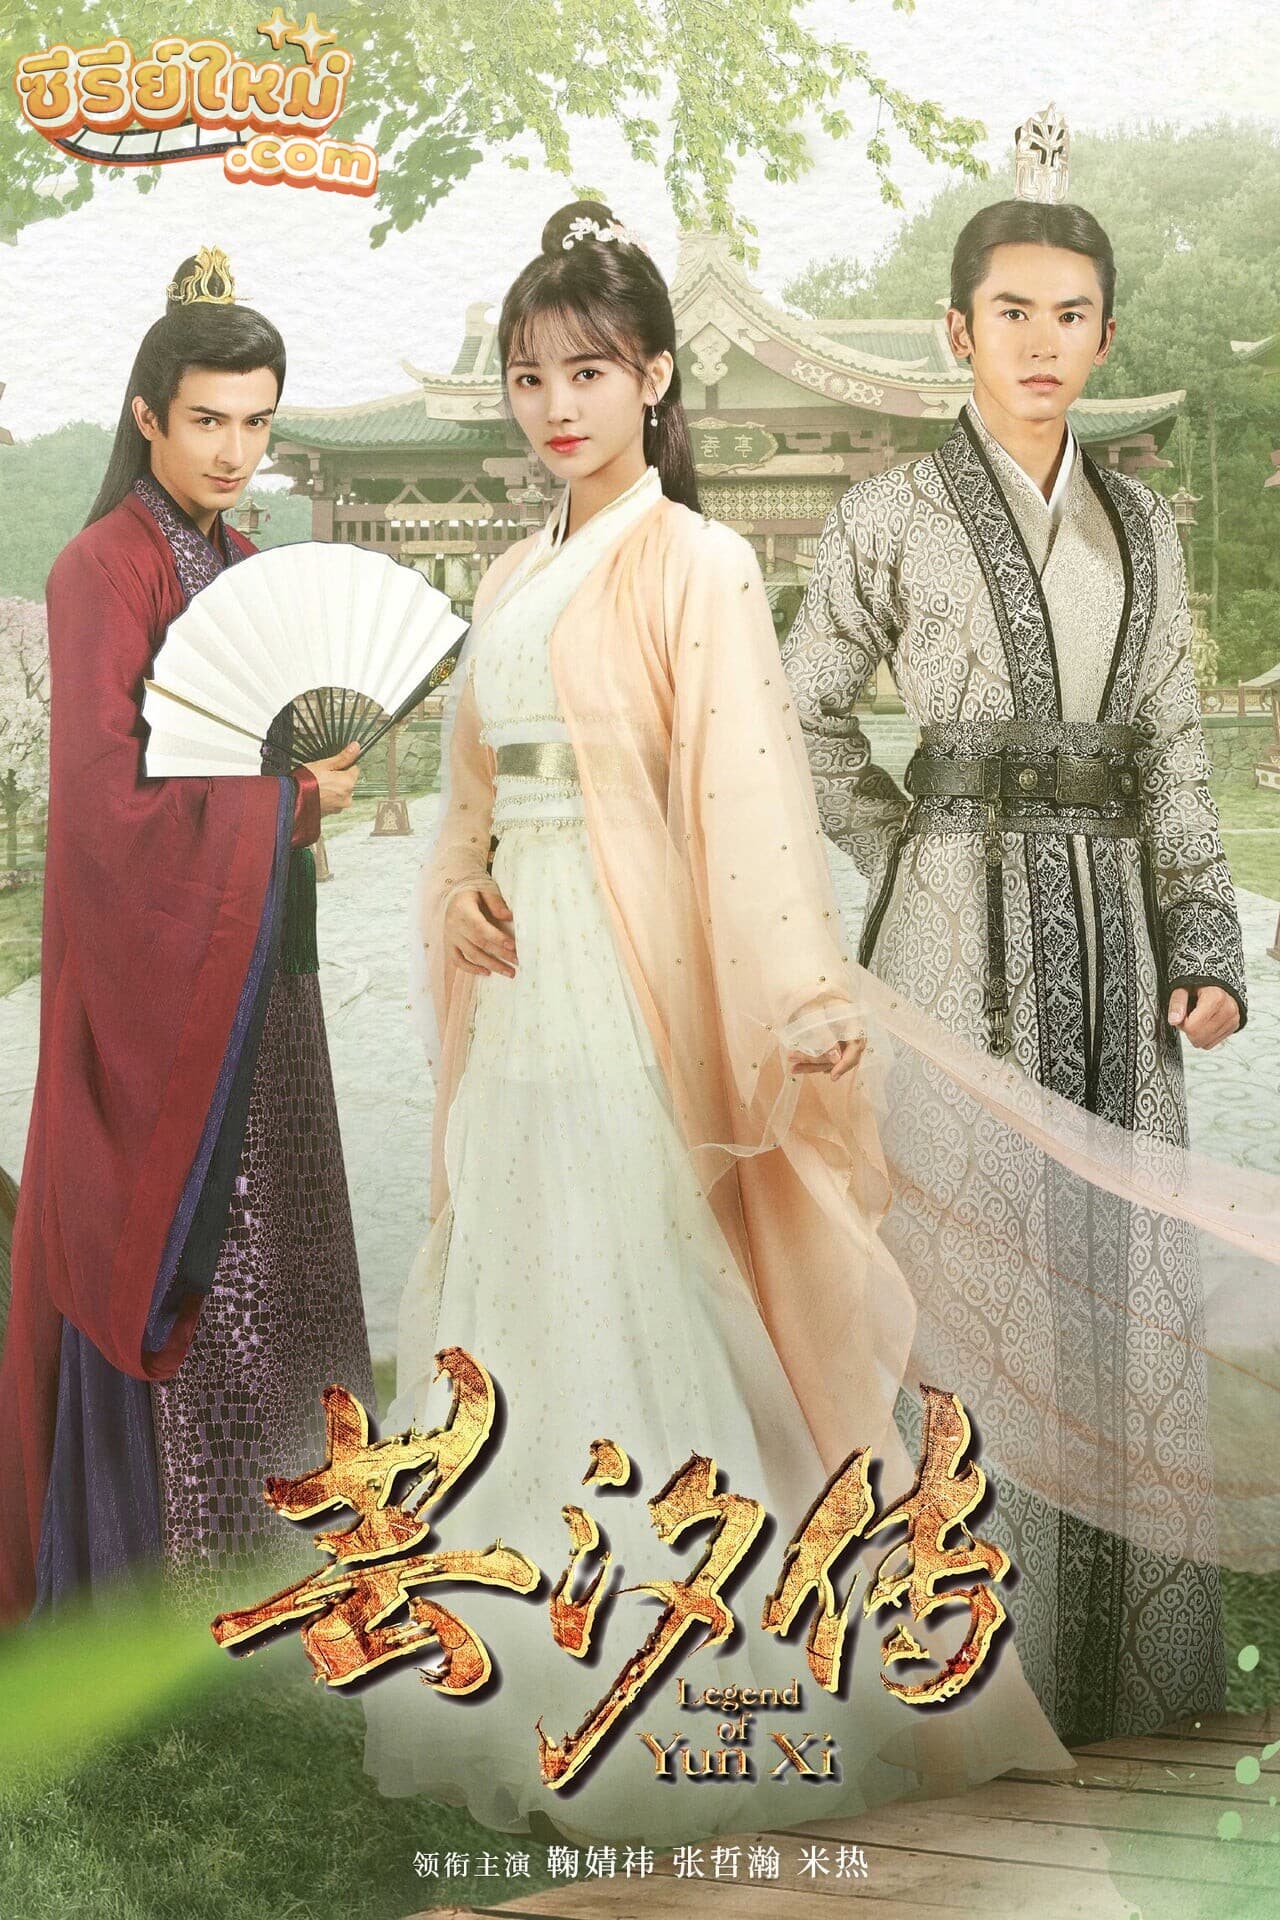 Legend of Yun Xi หยุนซี หมอพิษหญิงยอดอัจฉริยะ (2018)